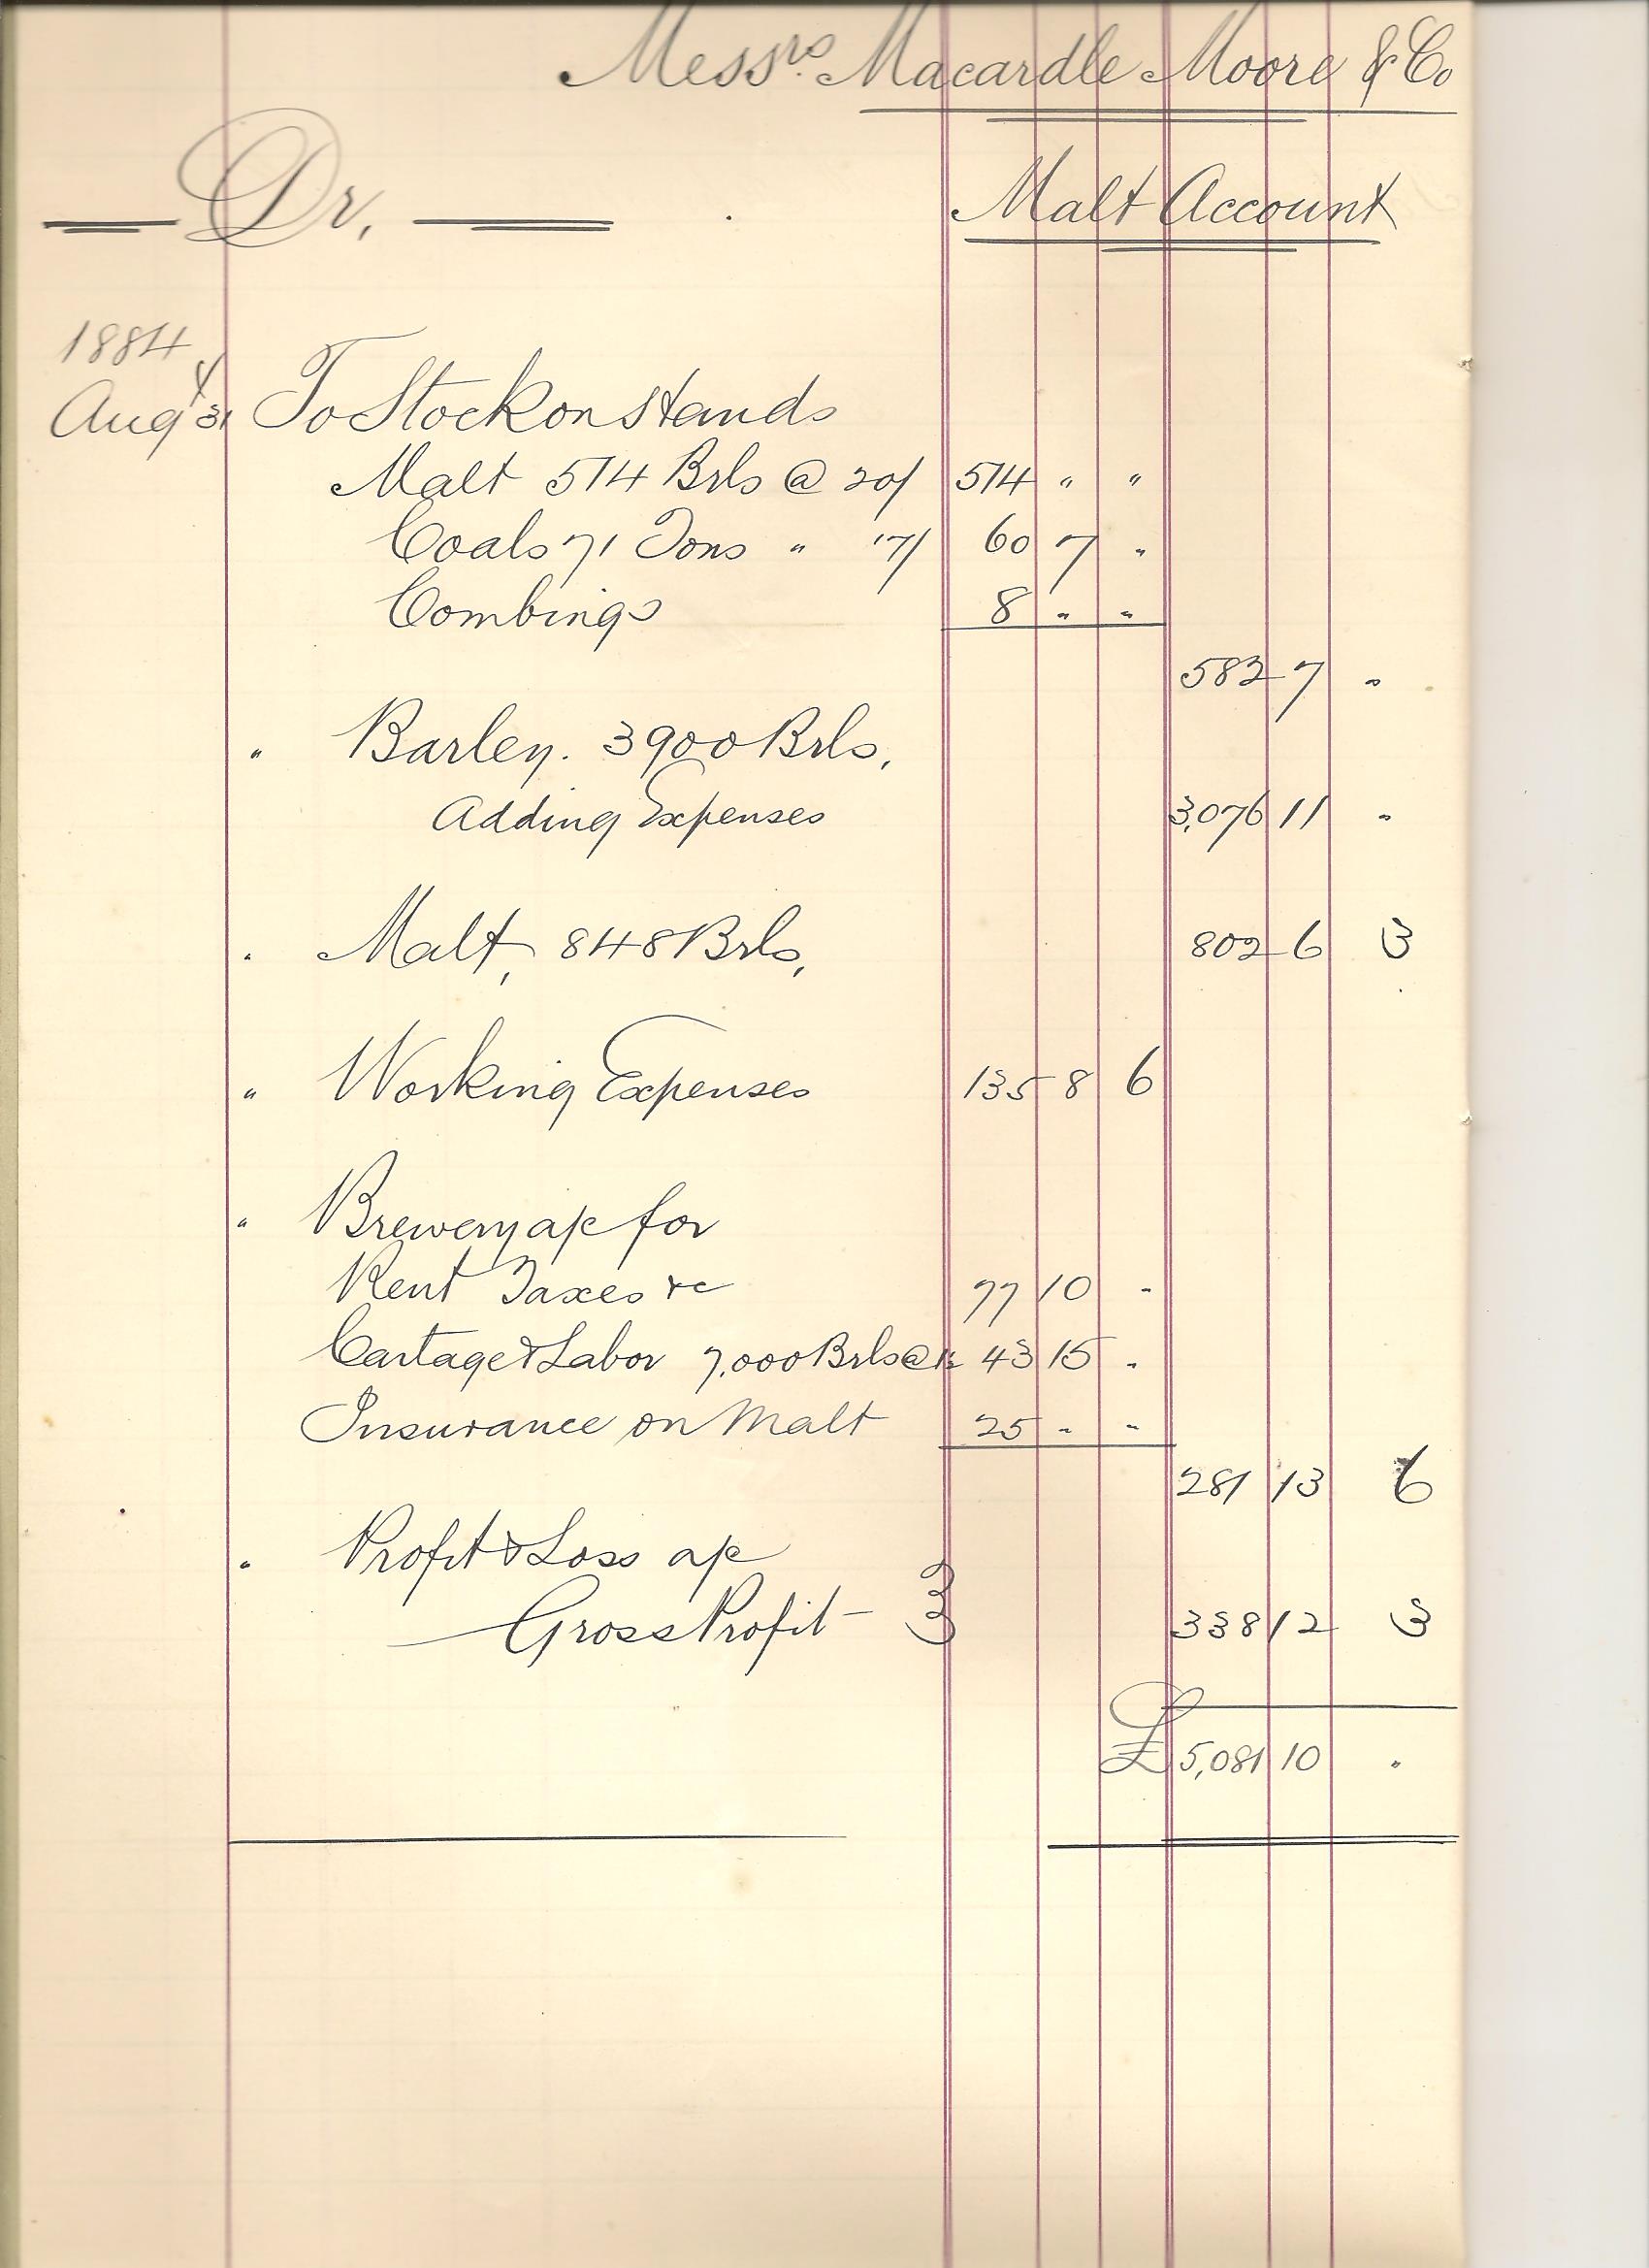 Macardle-Moore-Audit-29th-Feb-1885